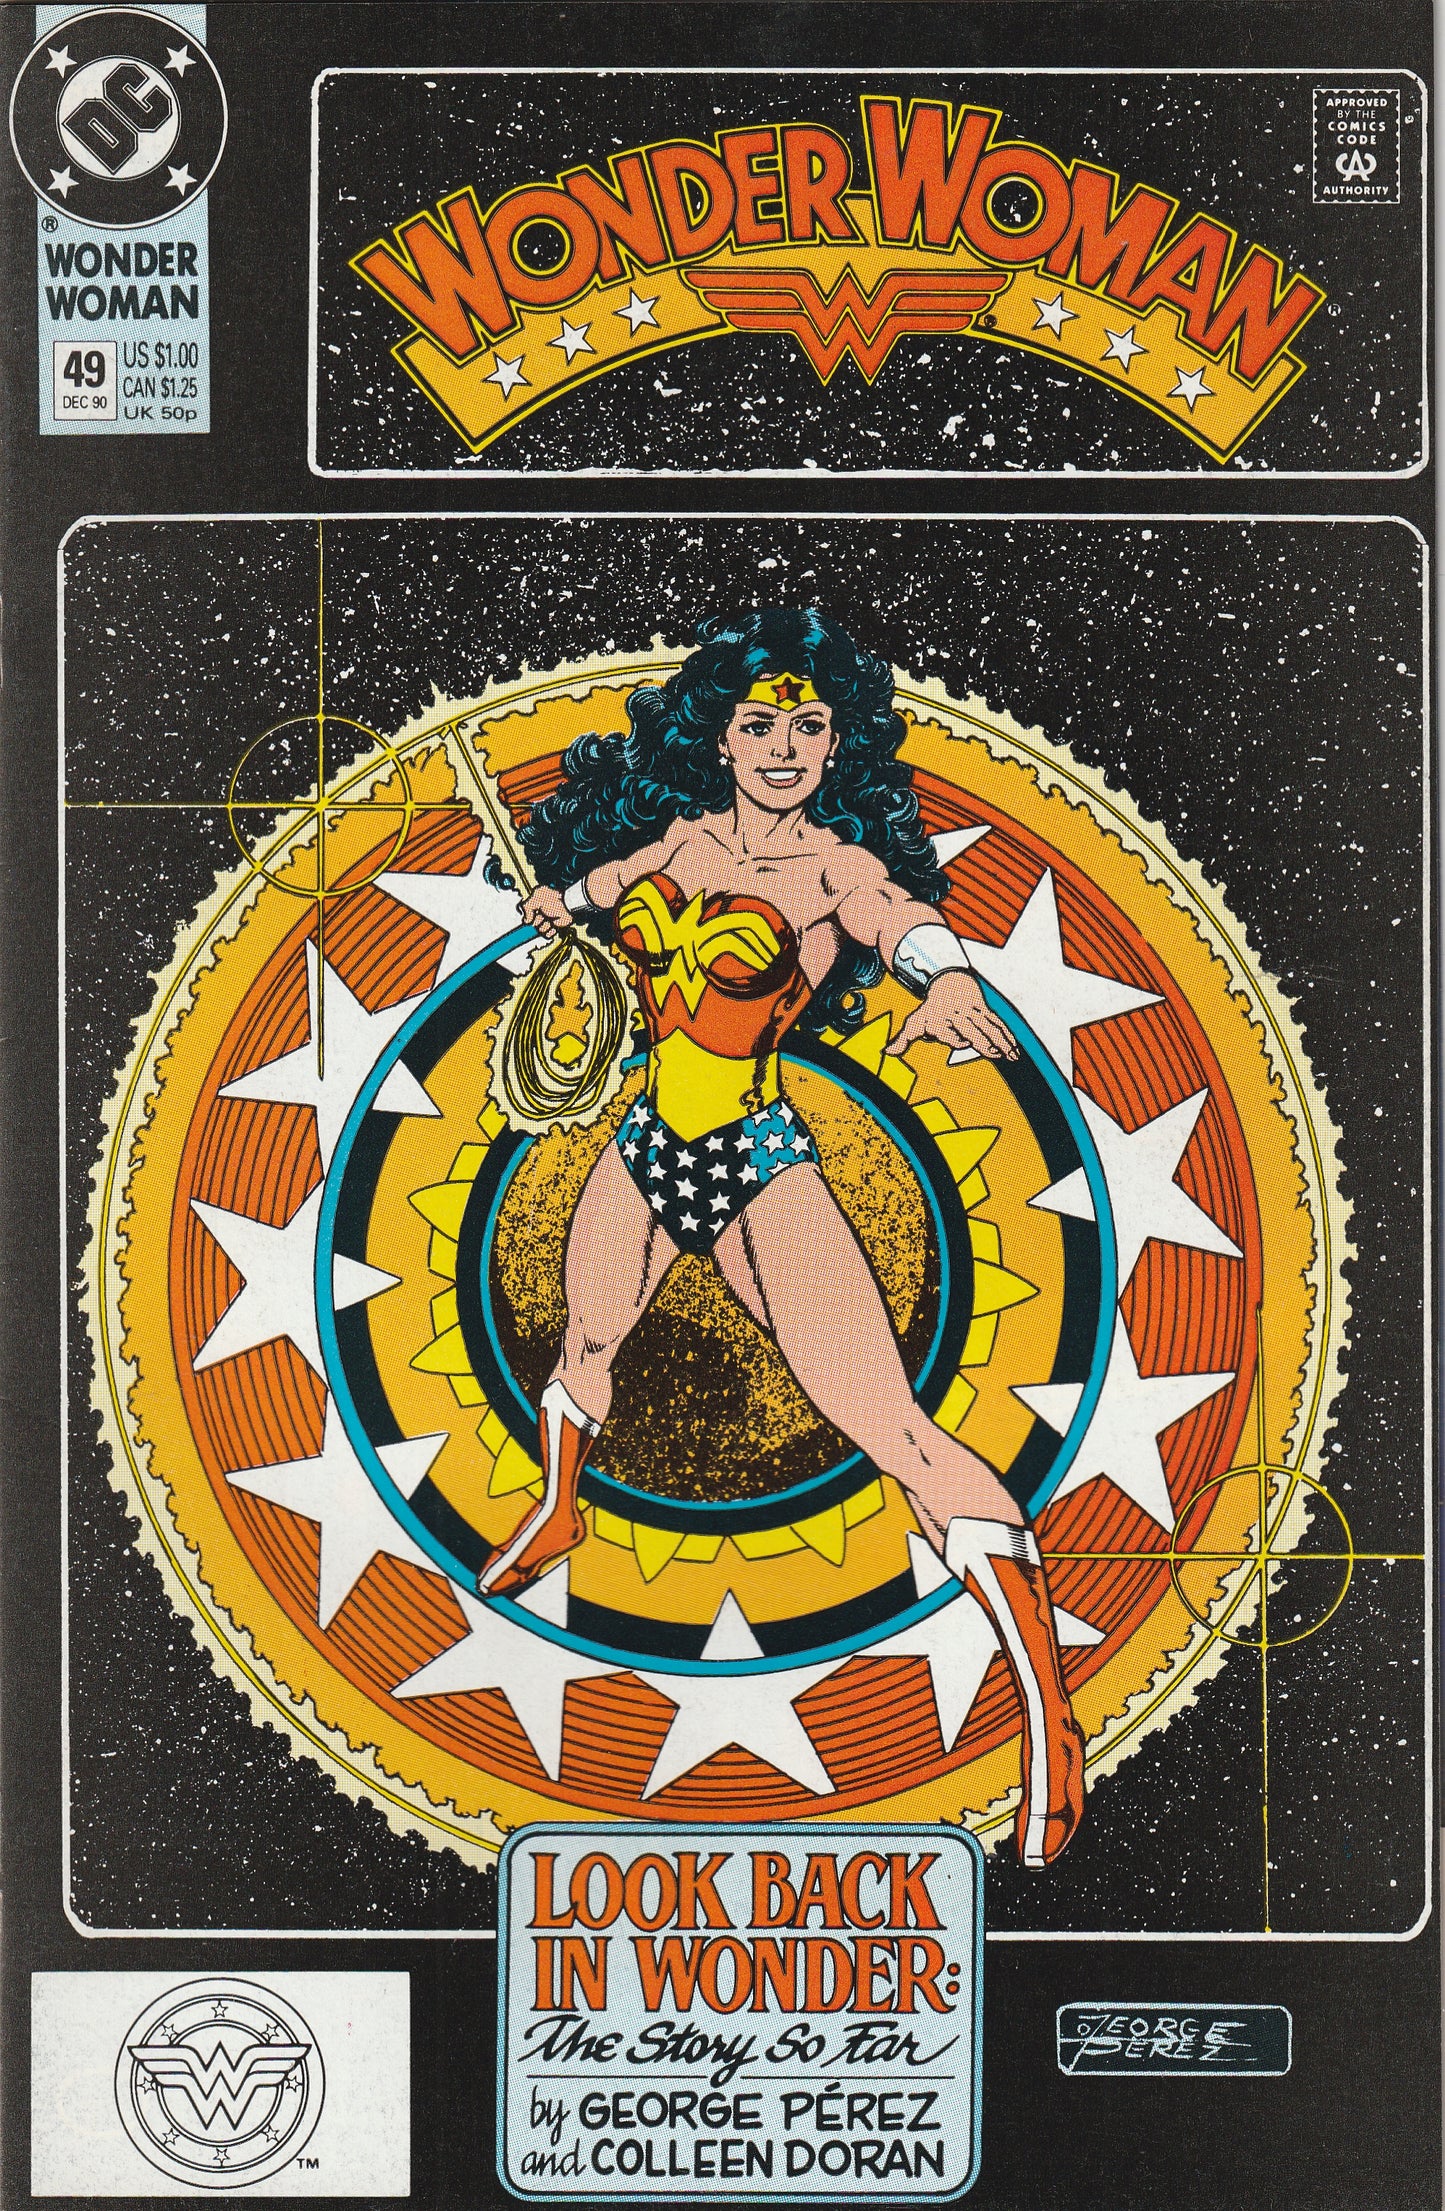 Wonder Woman #49 (1990) - Classic George Perez cover